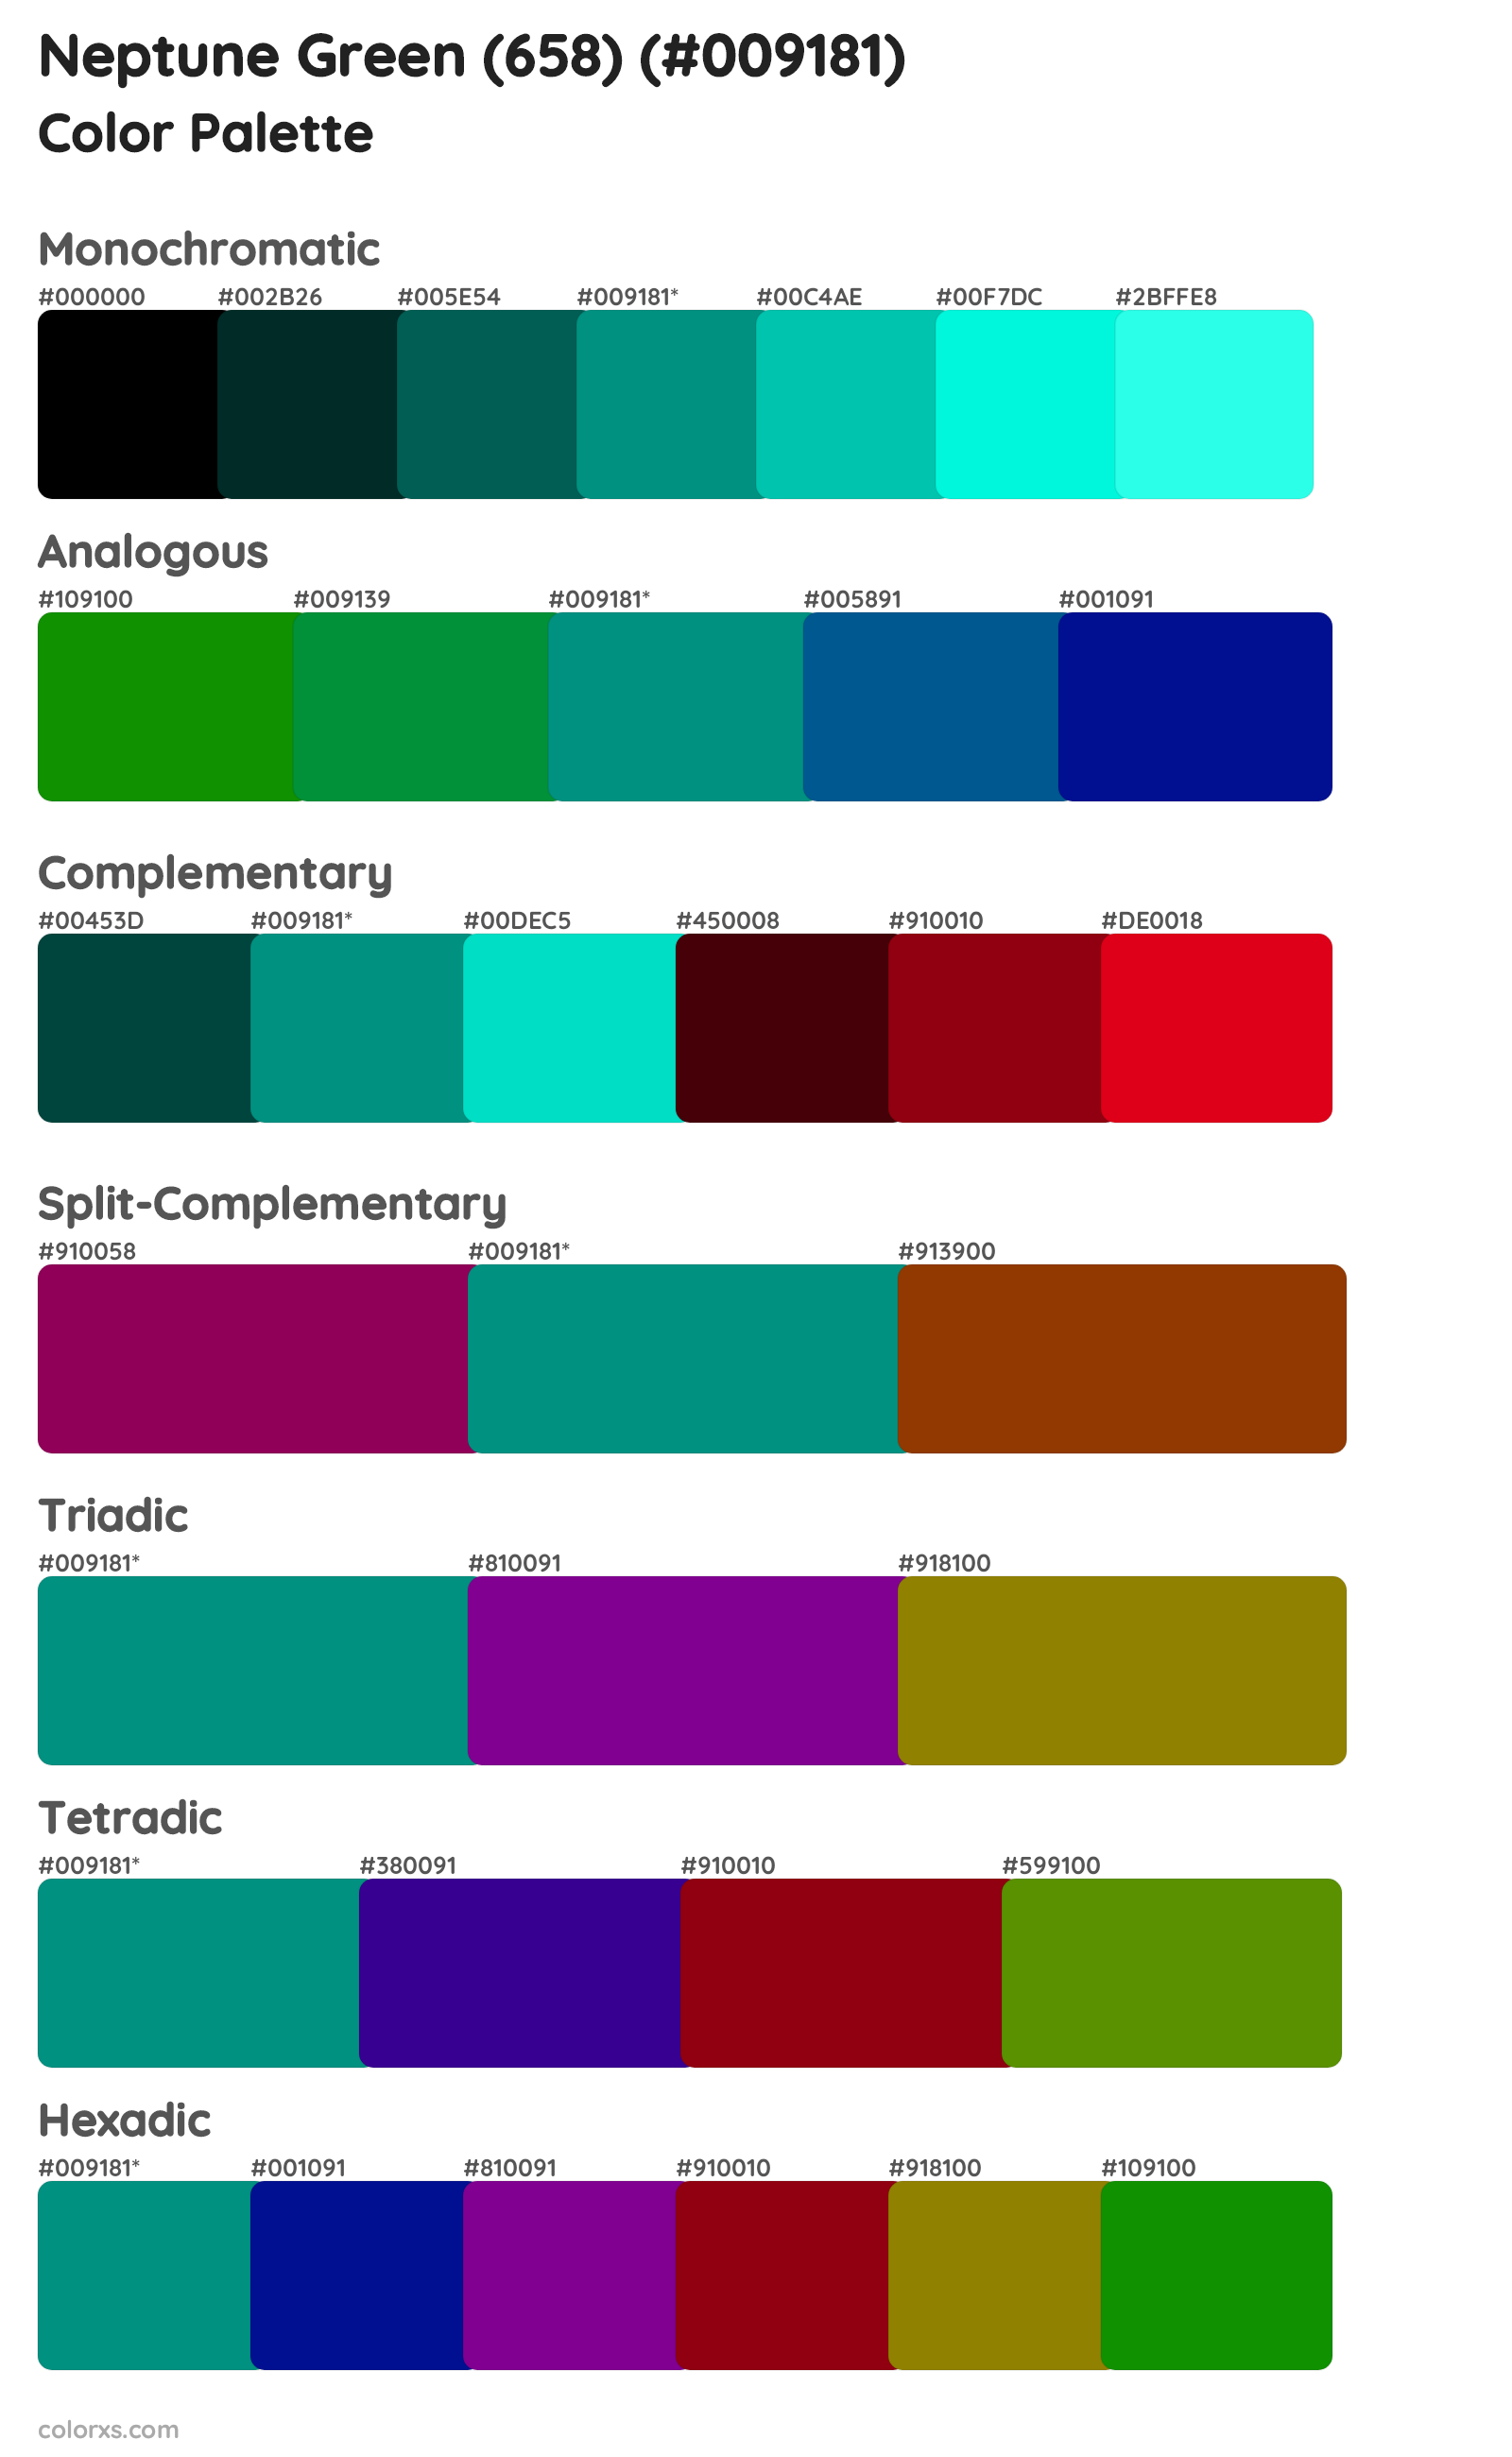 Neptune Green (658) Color Scheme Palettes